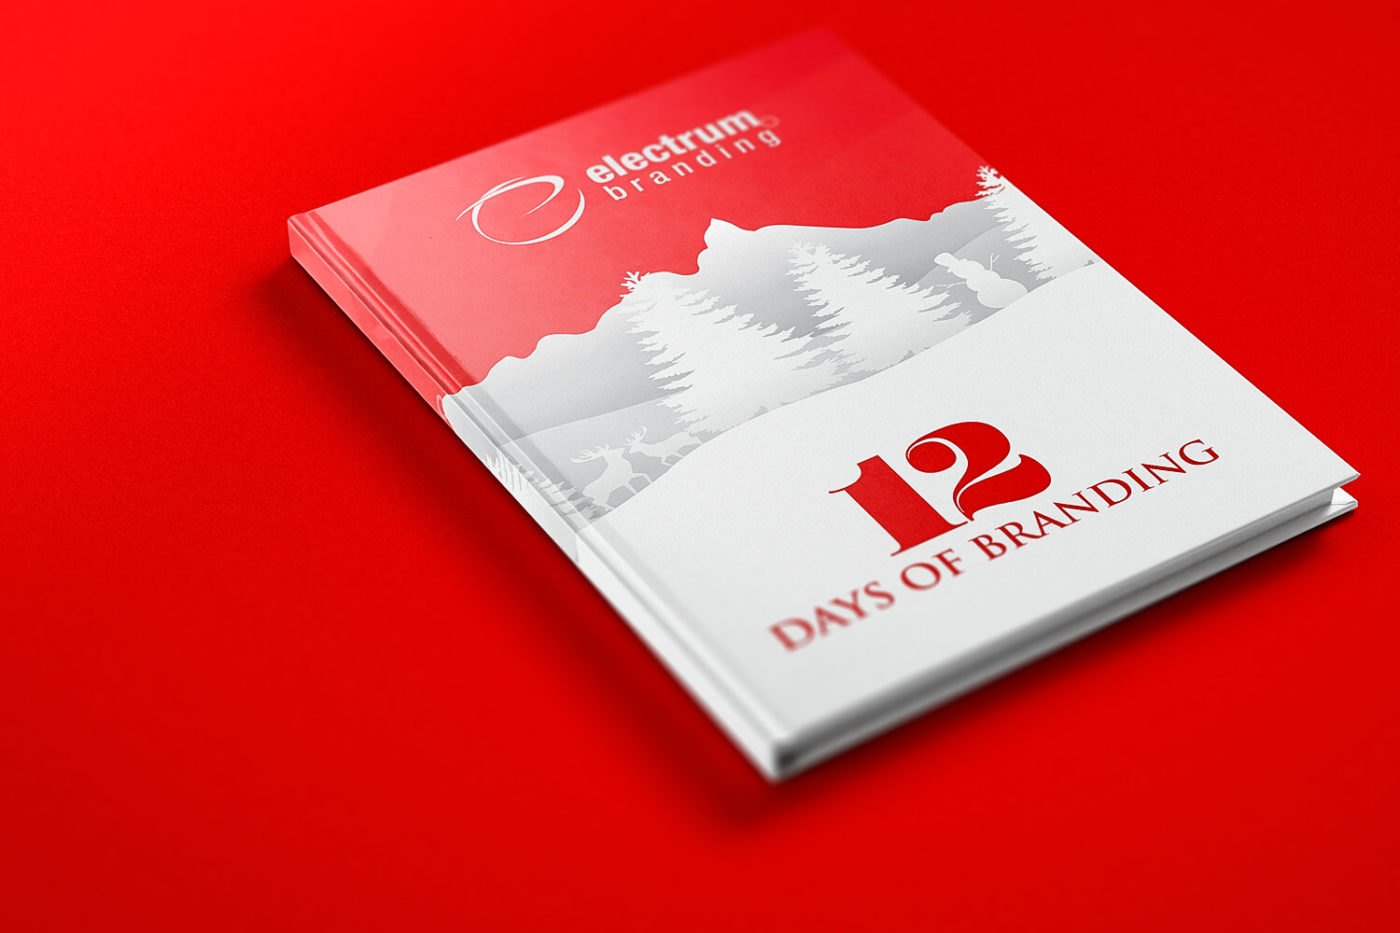 Book of 12 Days of Branding by Electrum Branding